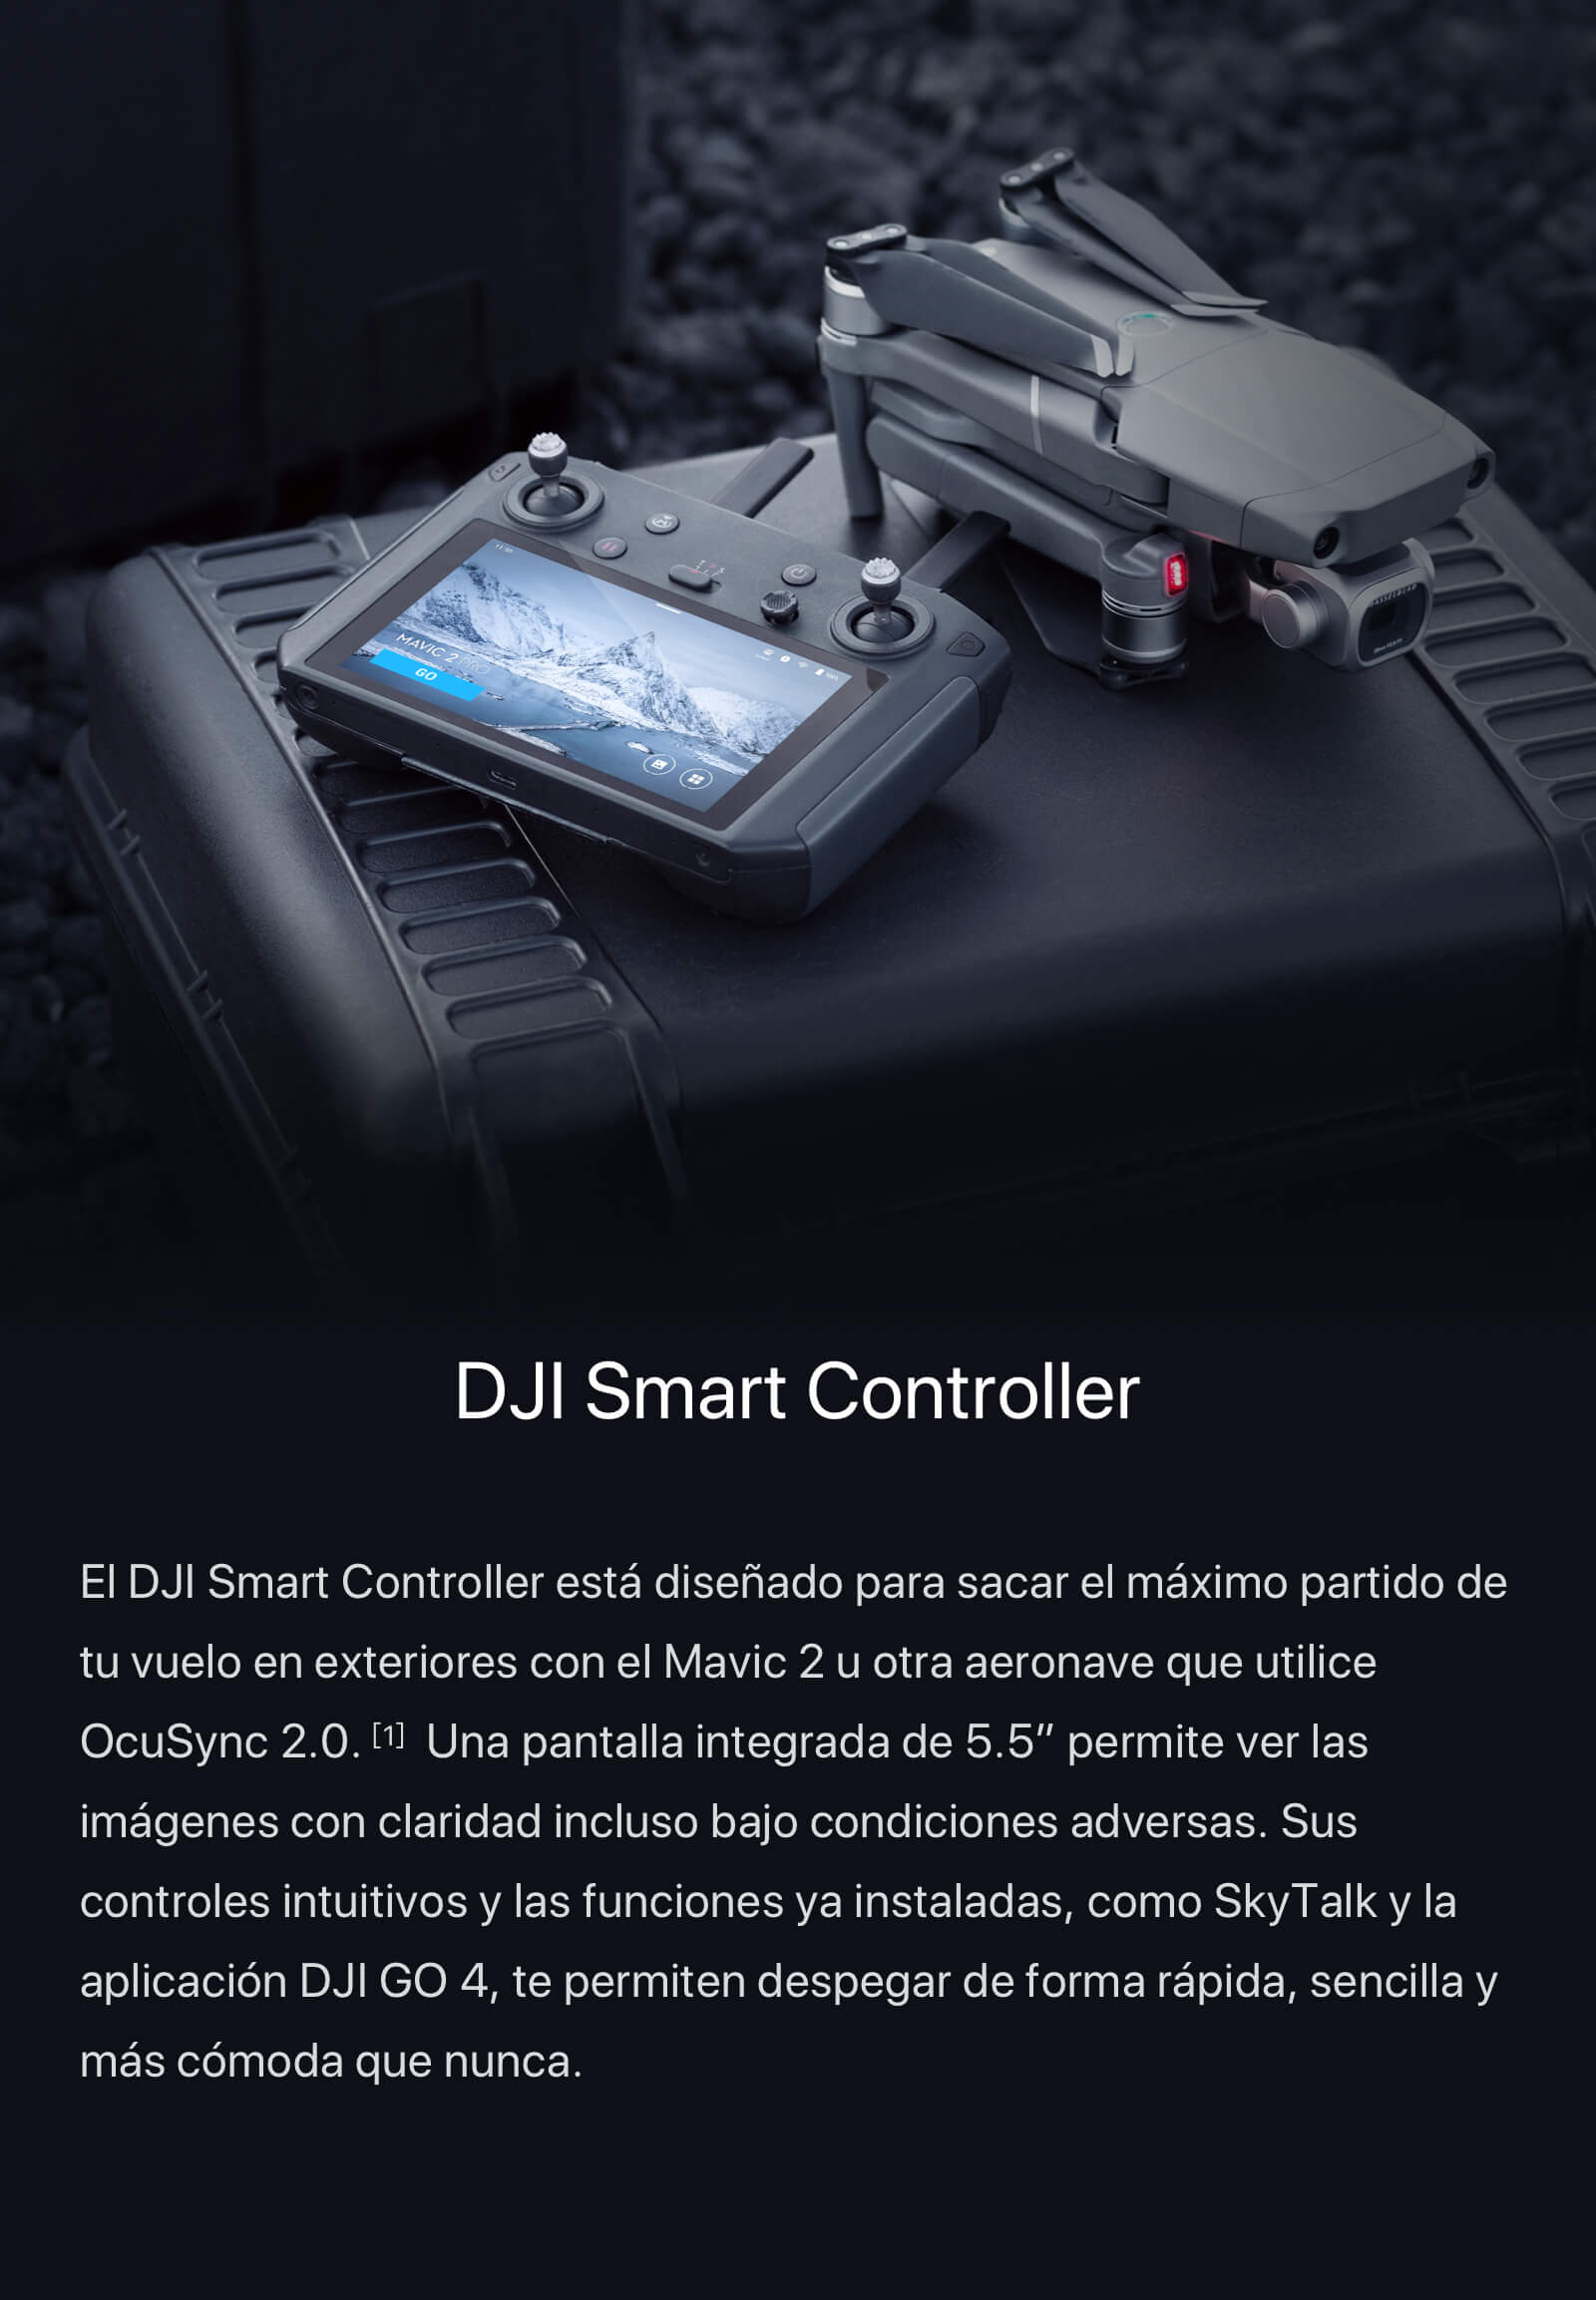 DJI SMART CONTROLLER DRONE PRIX